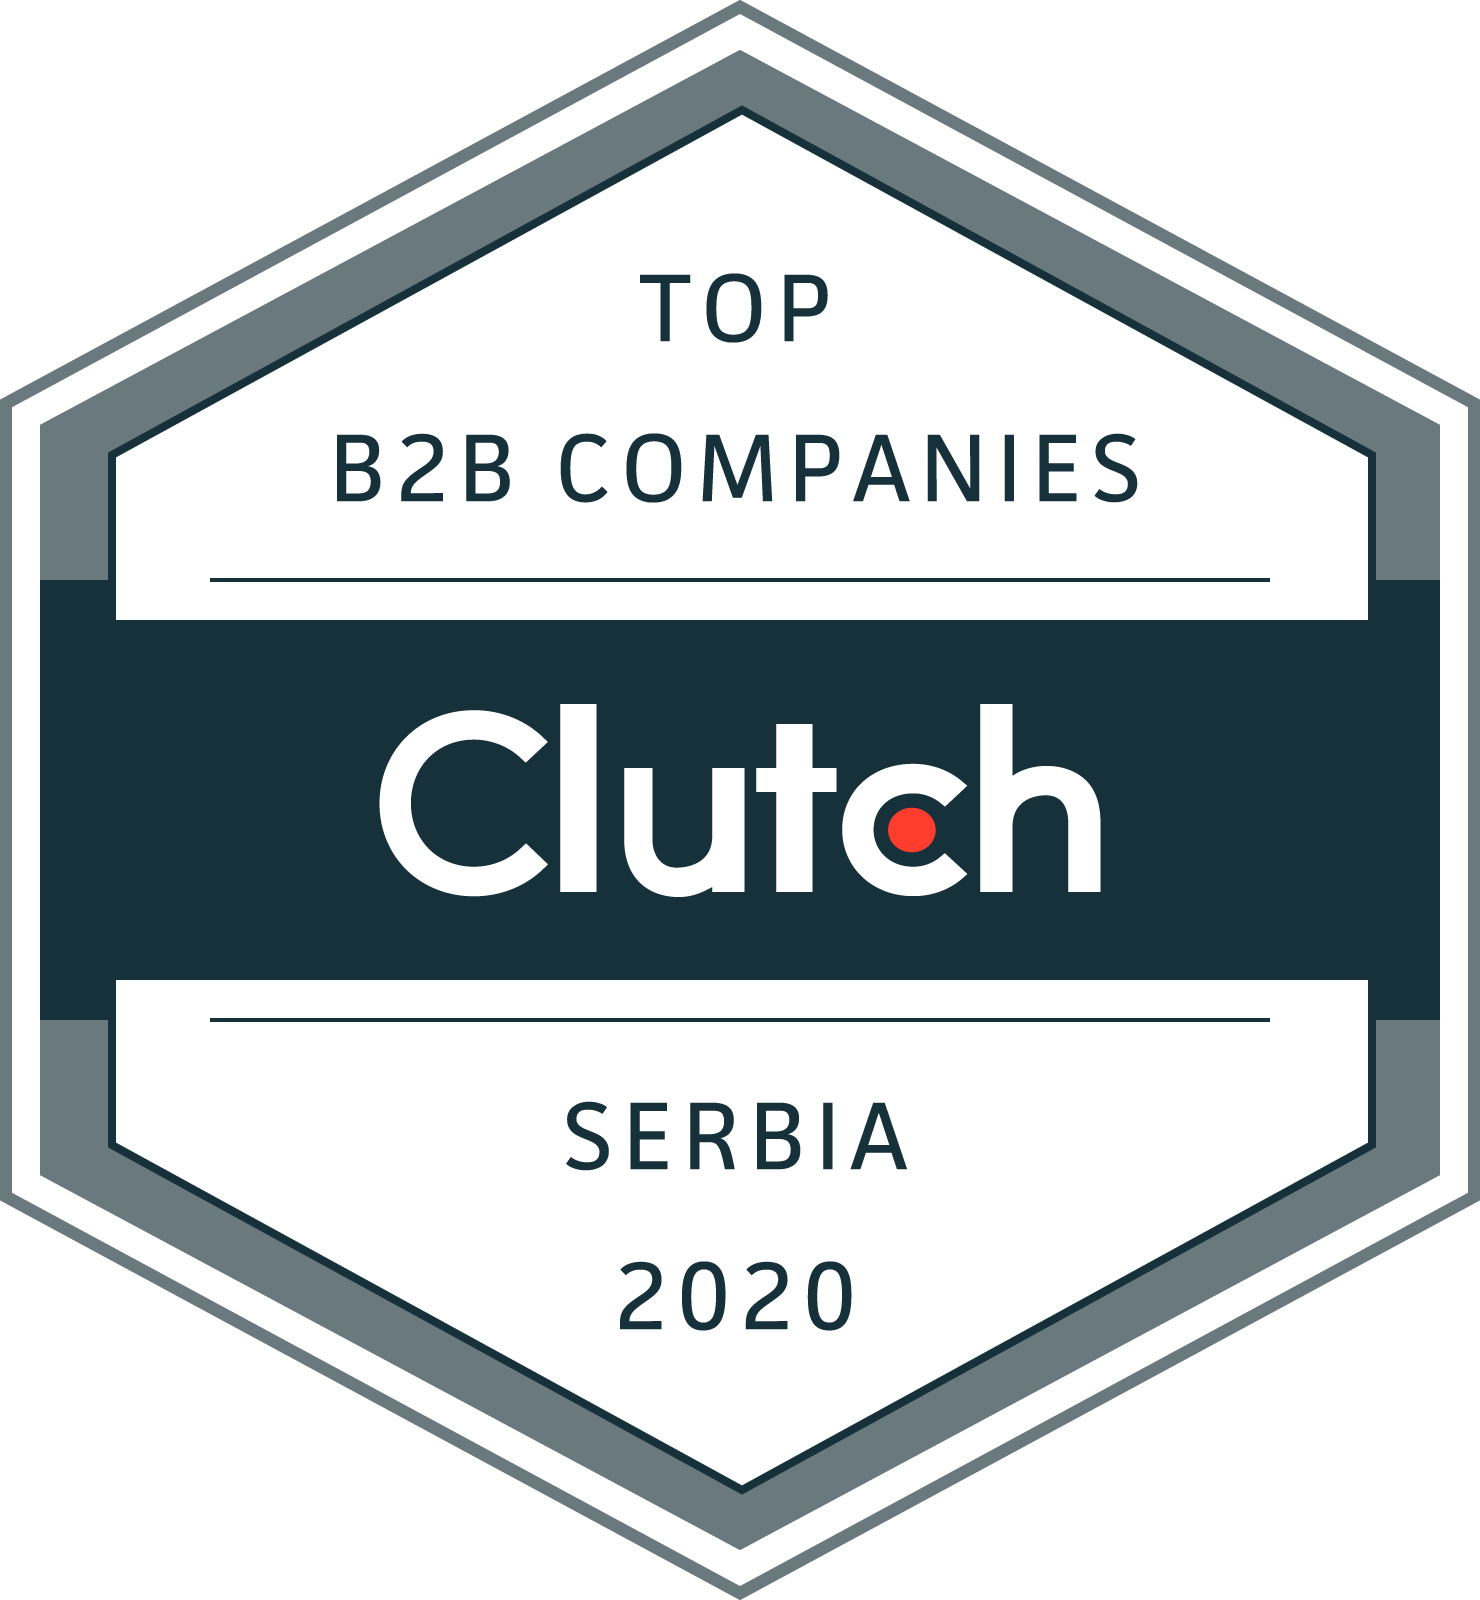 Top B2B Companies Serbia